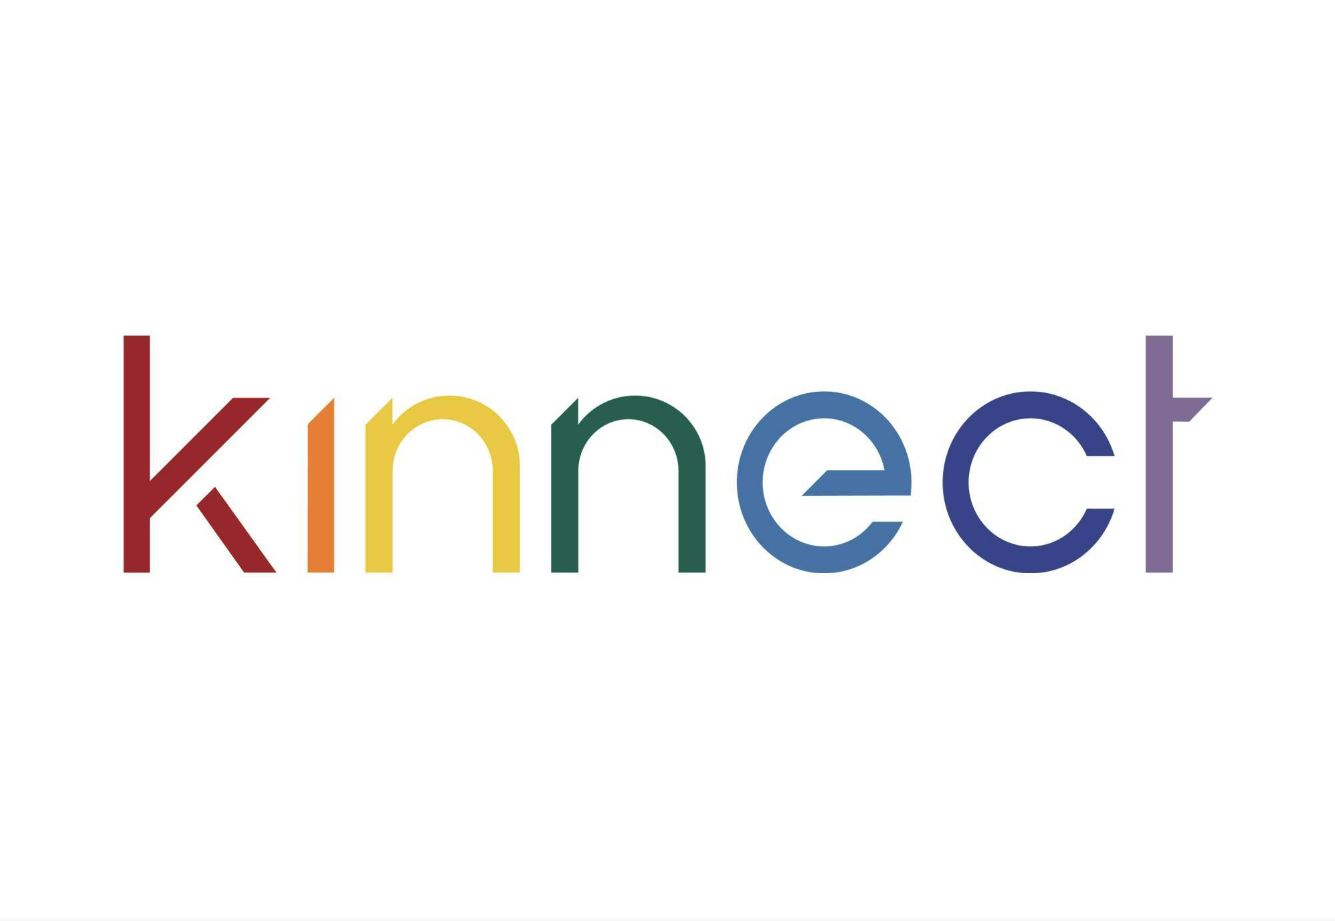 Kinnect